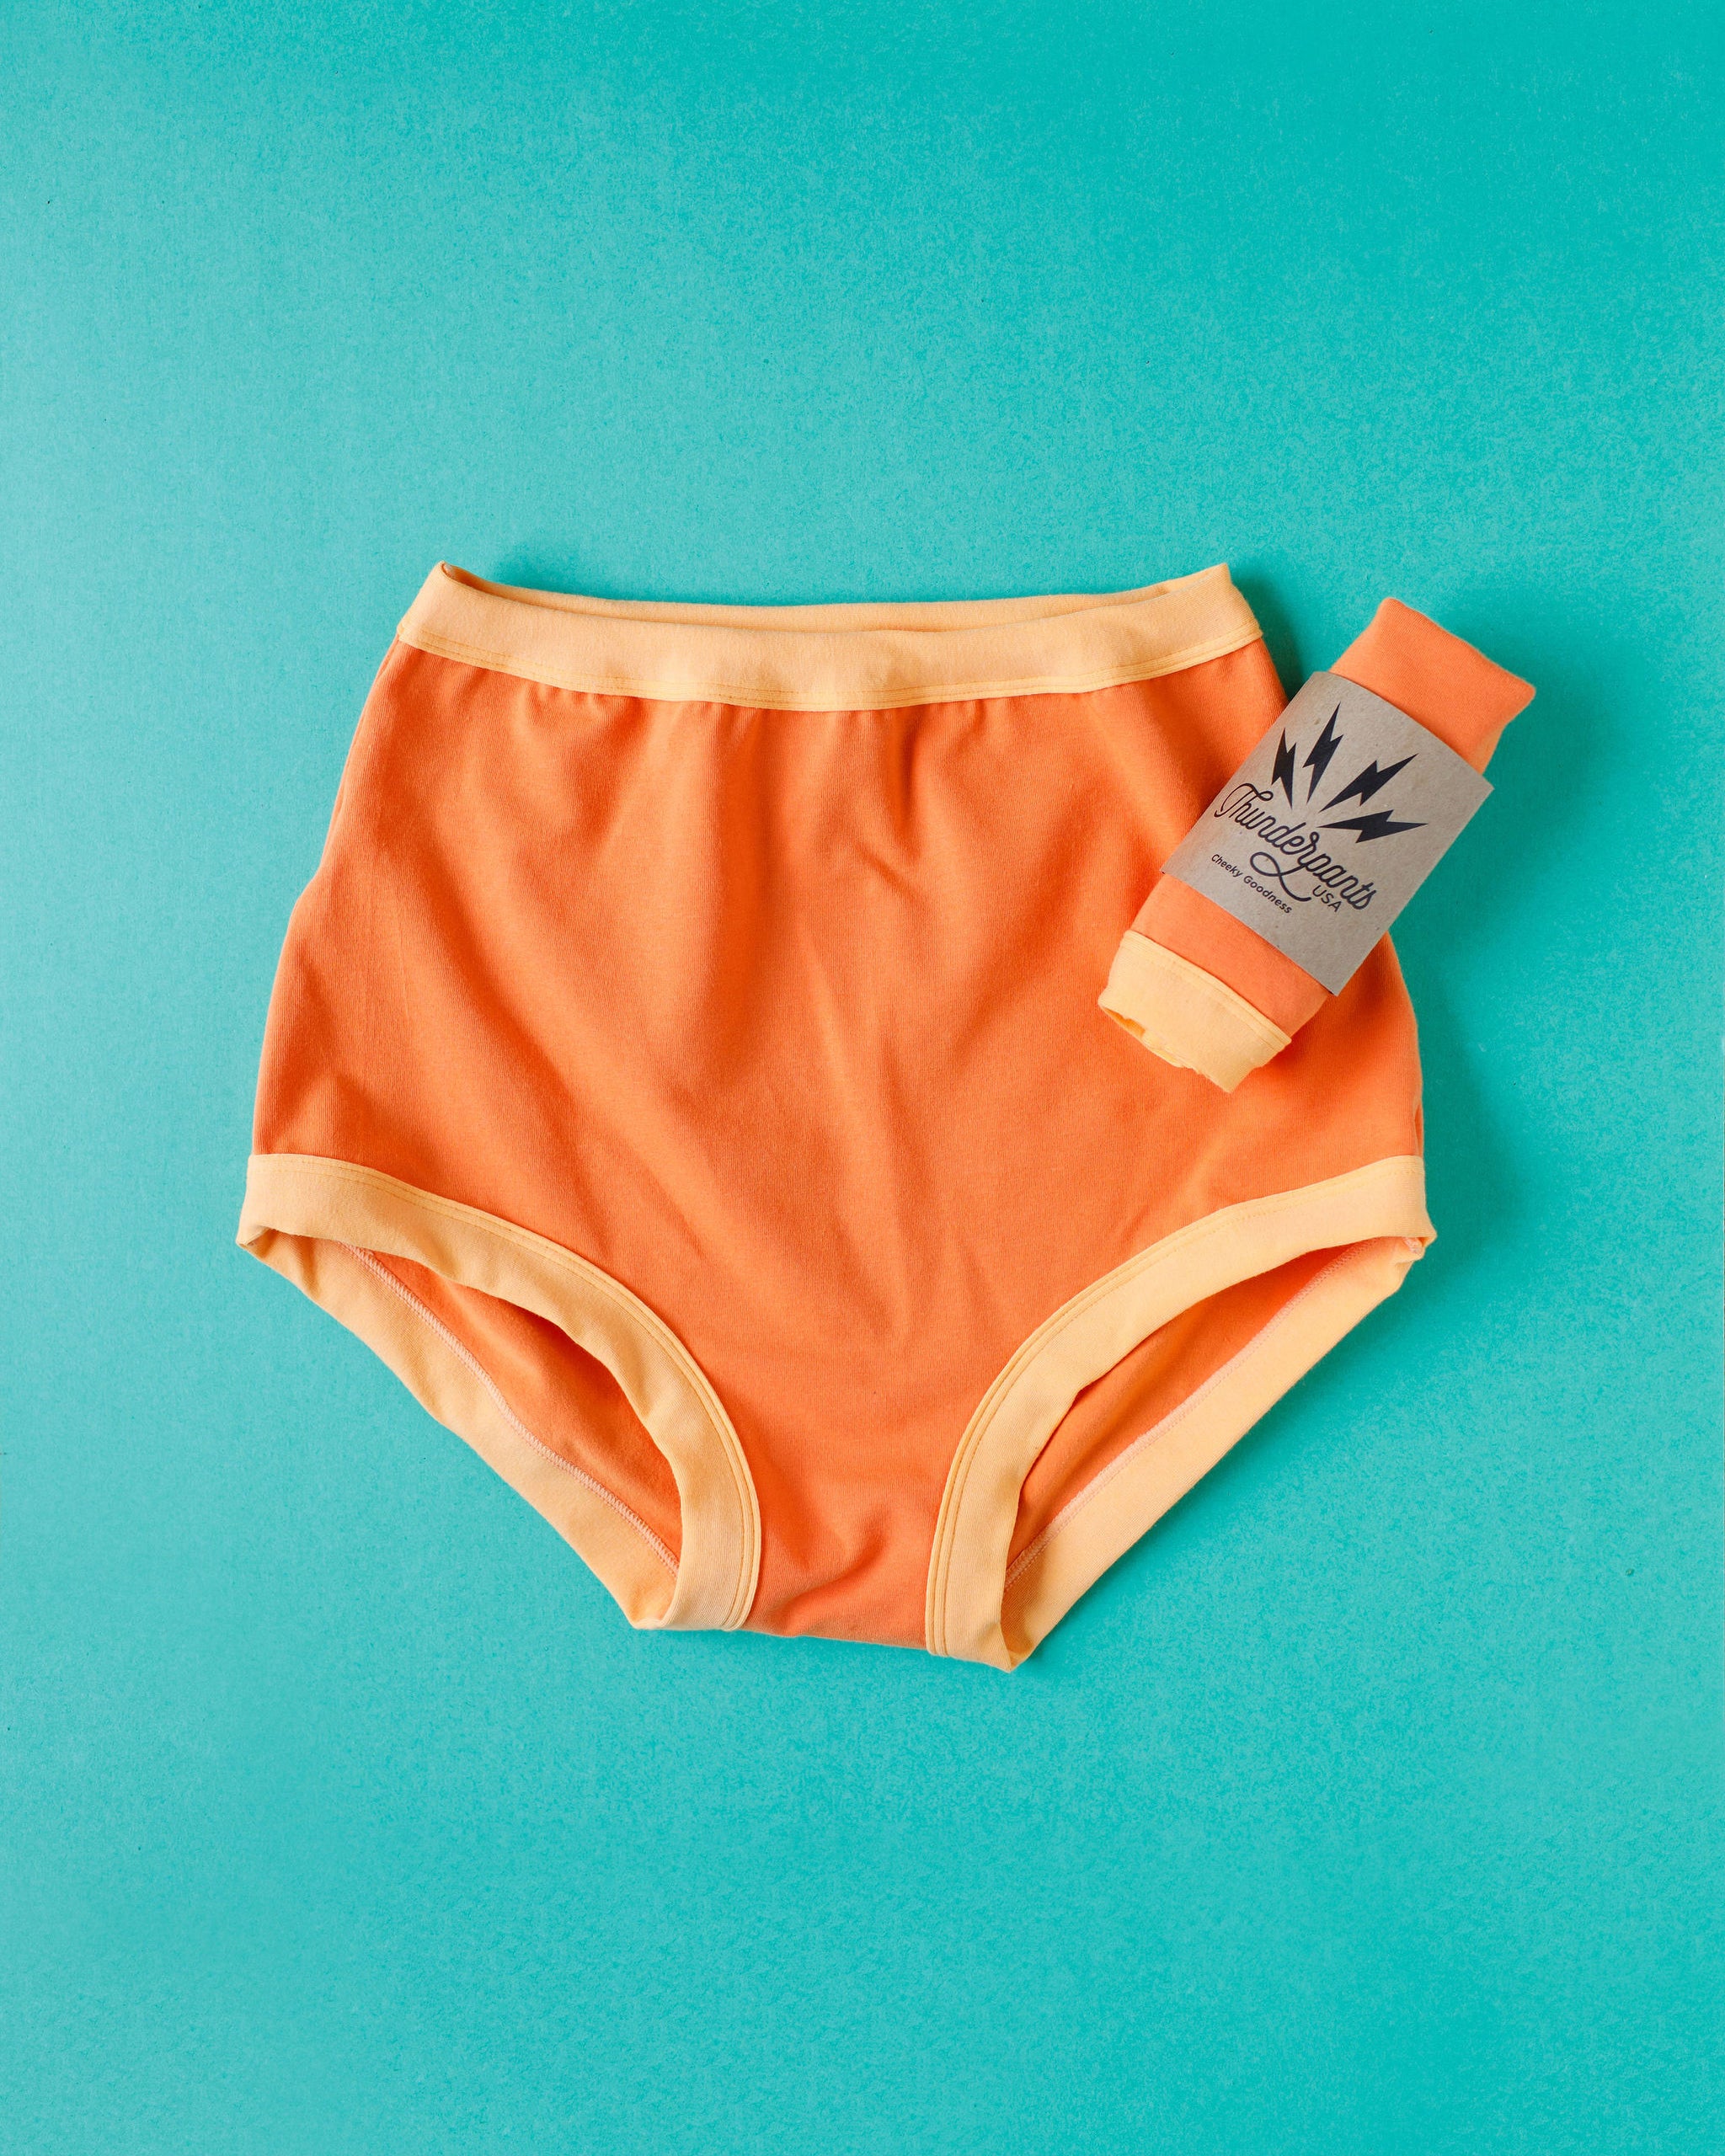 Flat lay of Thunderpants Sky Rise style underwear in Creamsicle: dark orange with light orange binding.